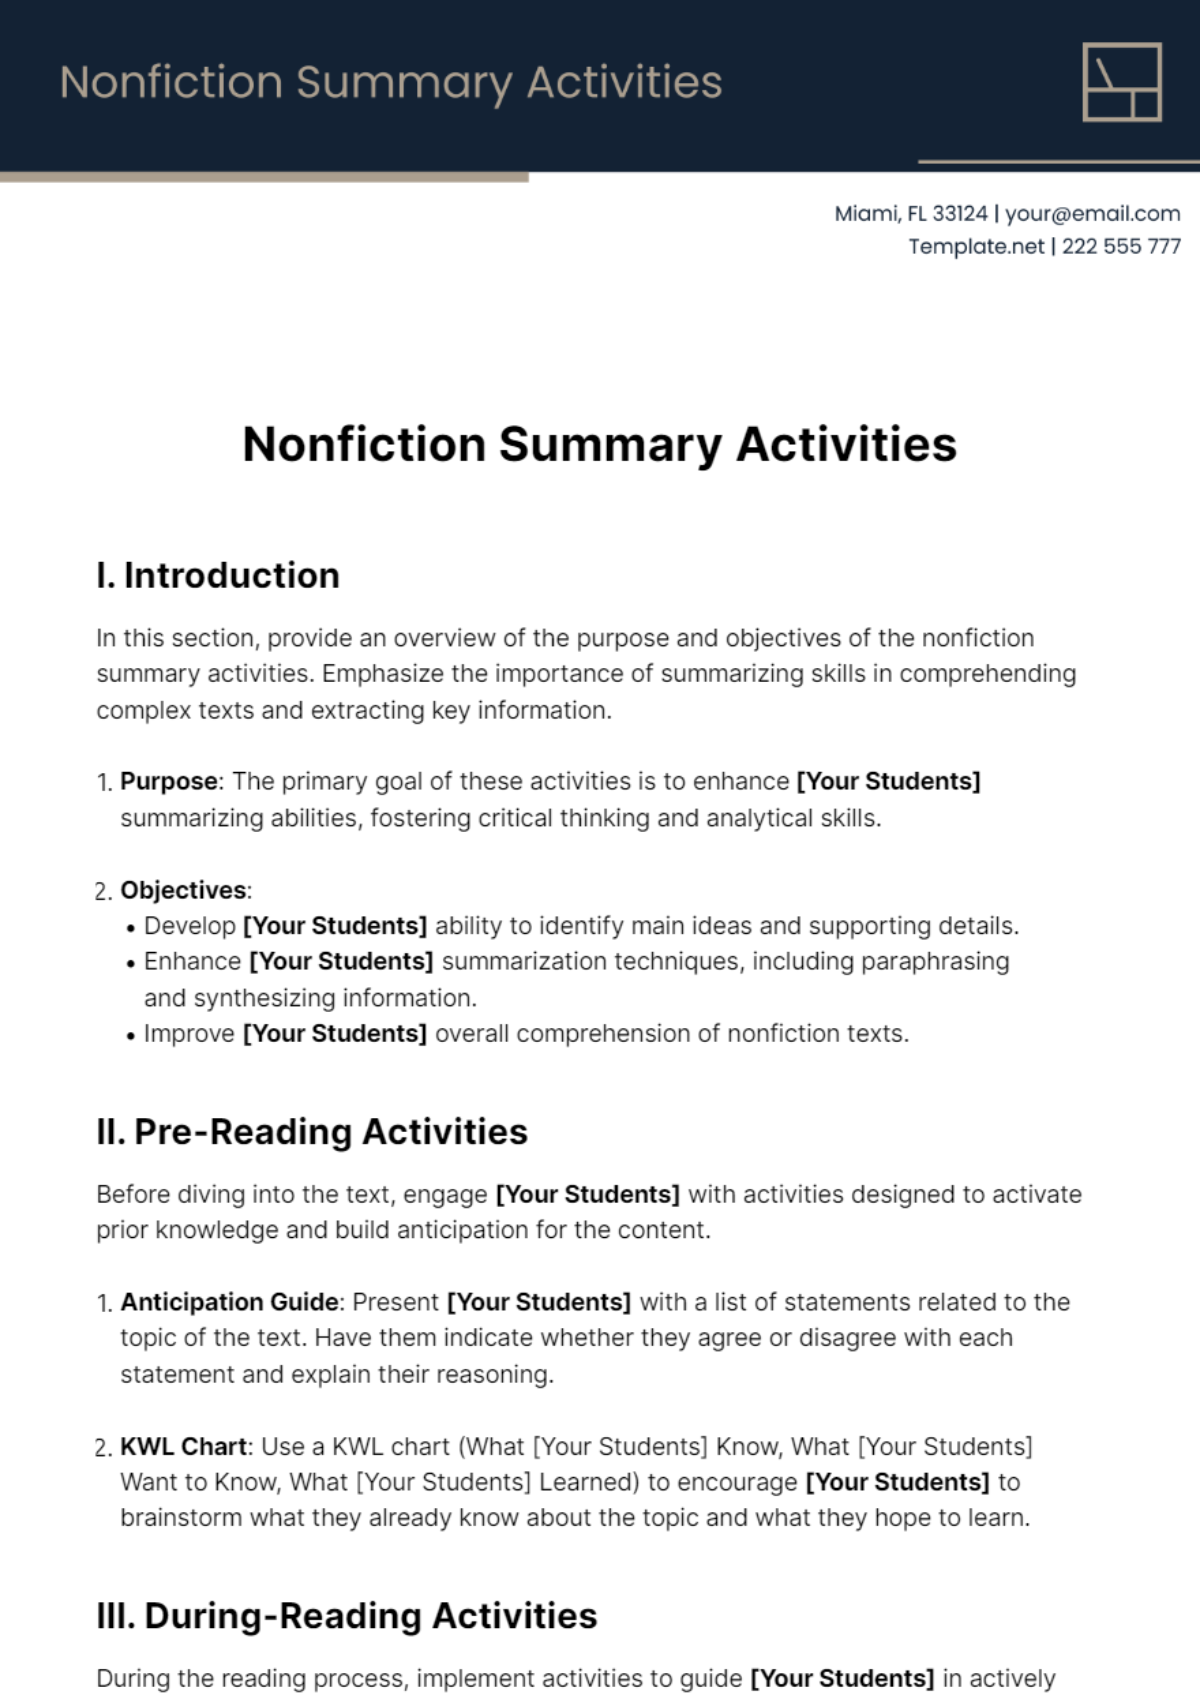 Nonfiction Summary Activities Template